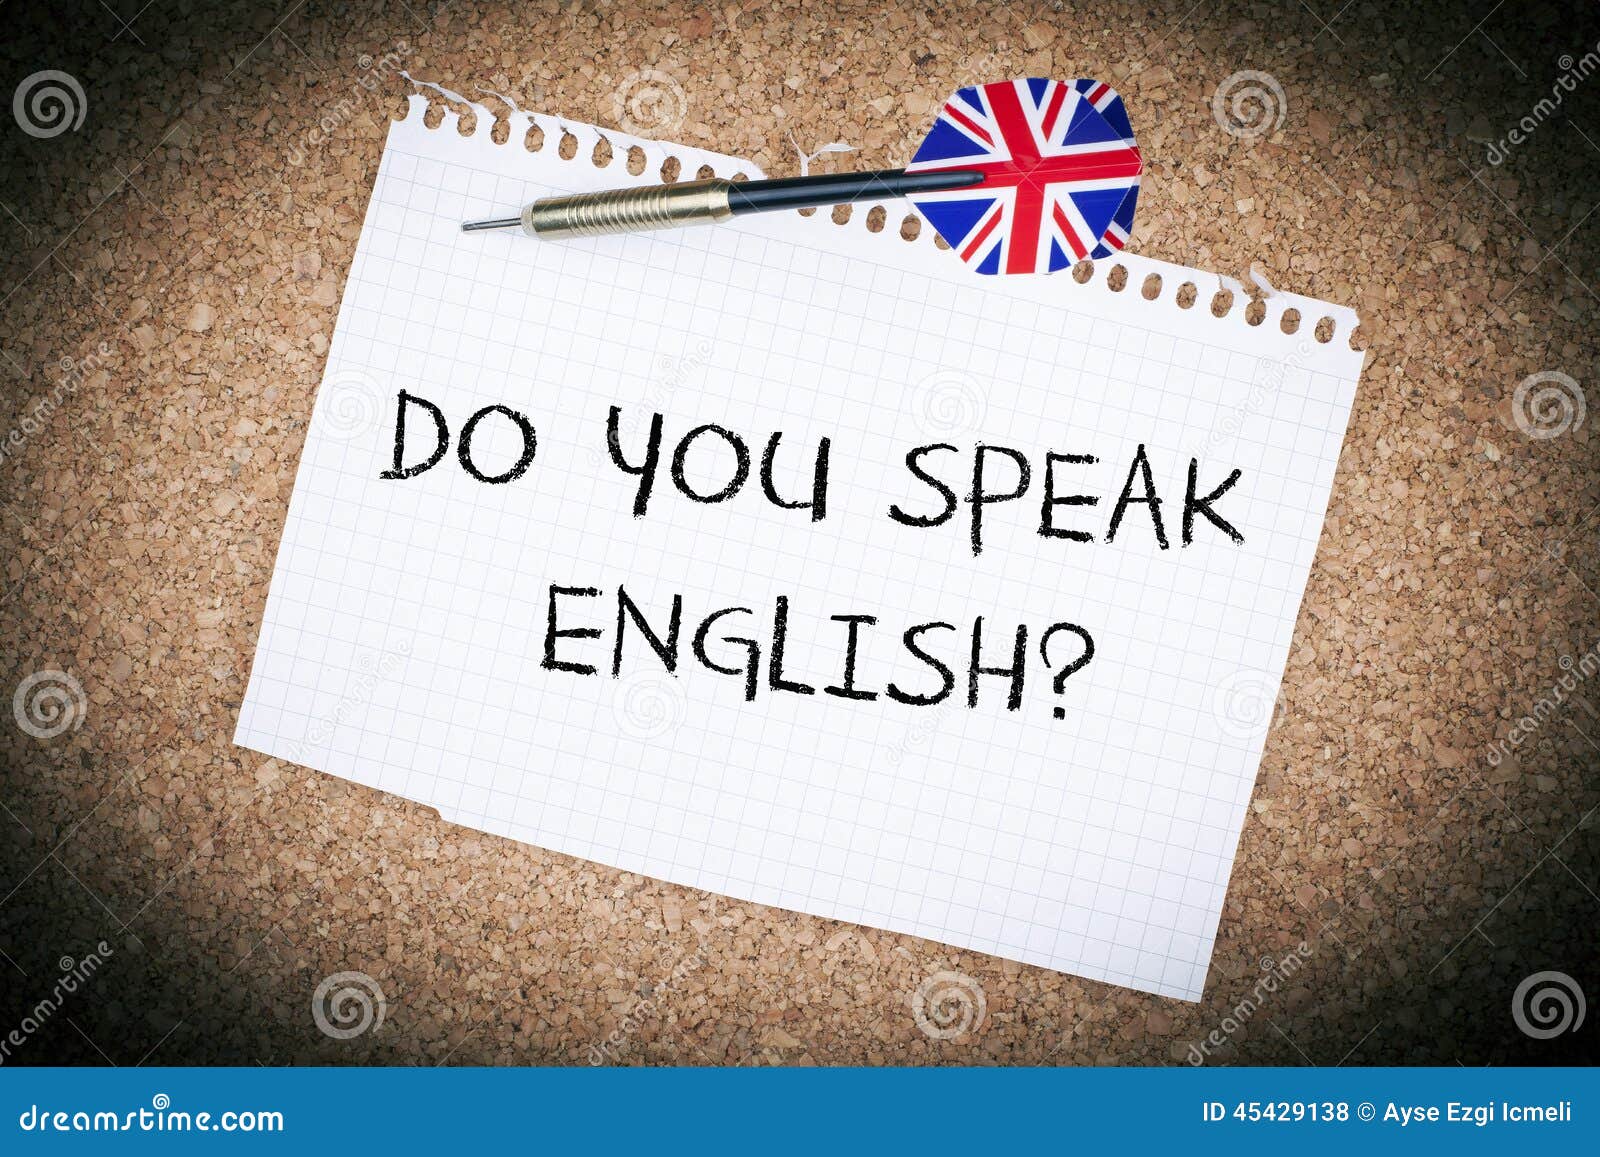 Do you speak english with me. Английский do you speak English. Do you speak English картинки. Do you speak English надпись. Плакат do you speak English.